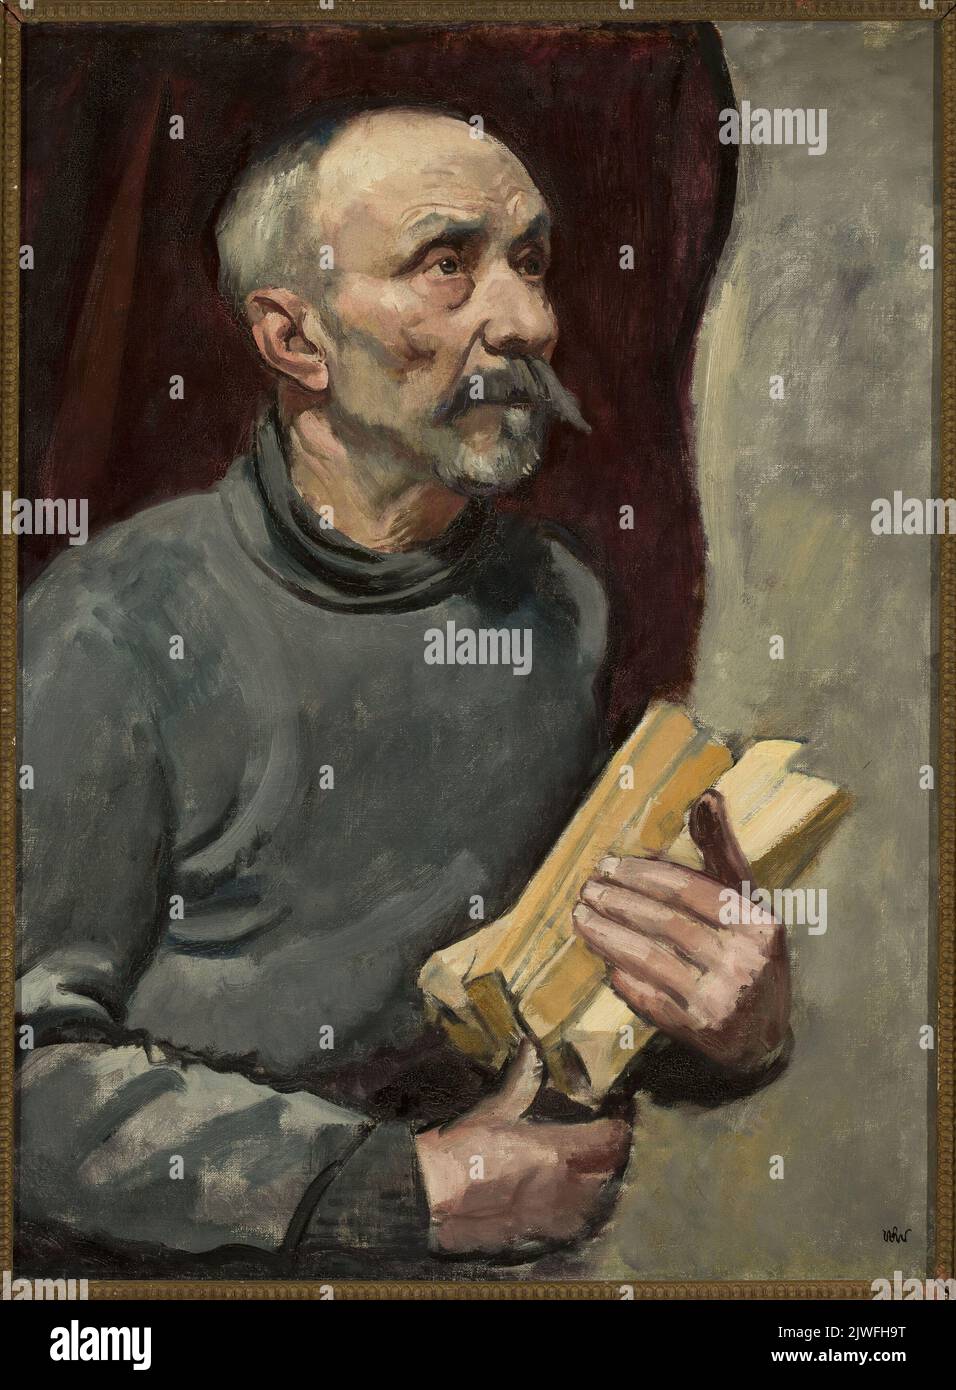 Old man with chopped wood. Weiss, Wojciech (1875-1950), painter Stock Photo